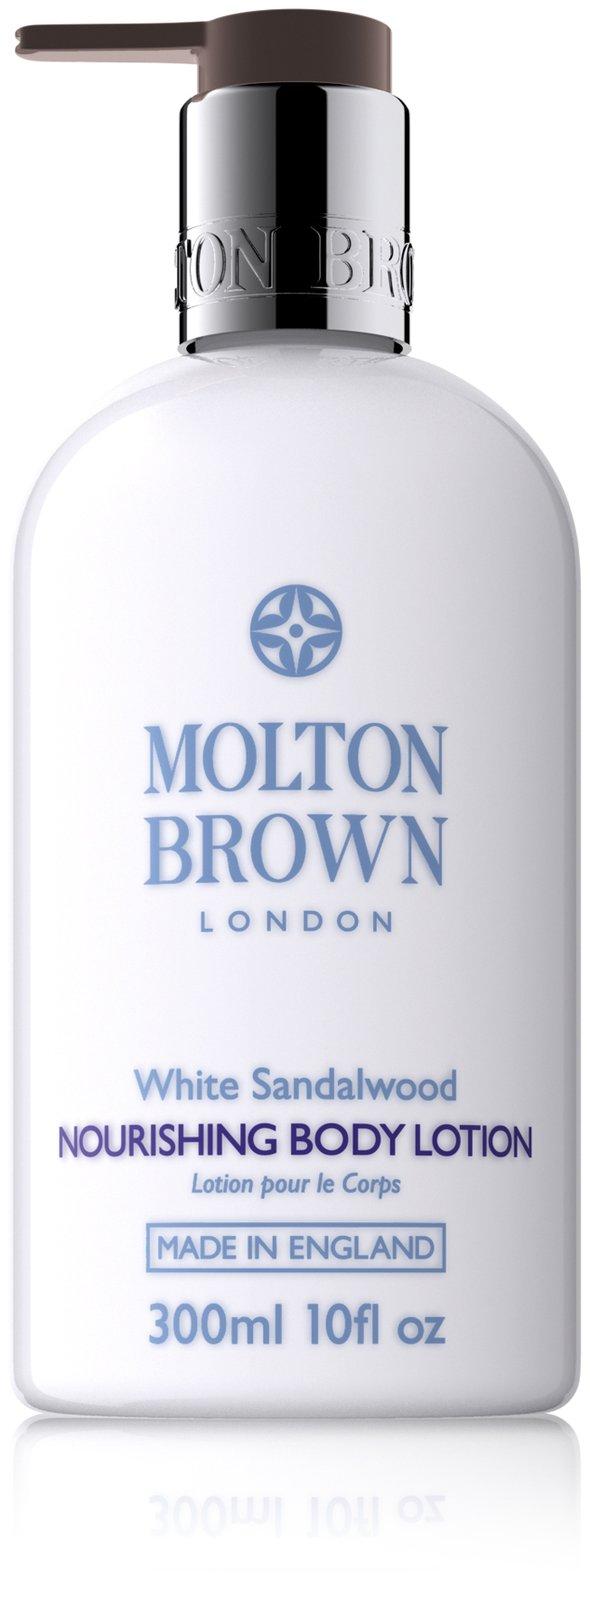 Molton Brown White Sandalwood Body Lotion